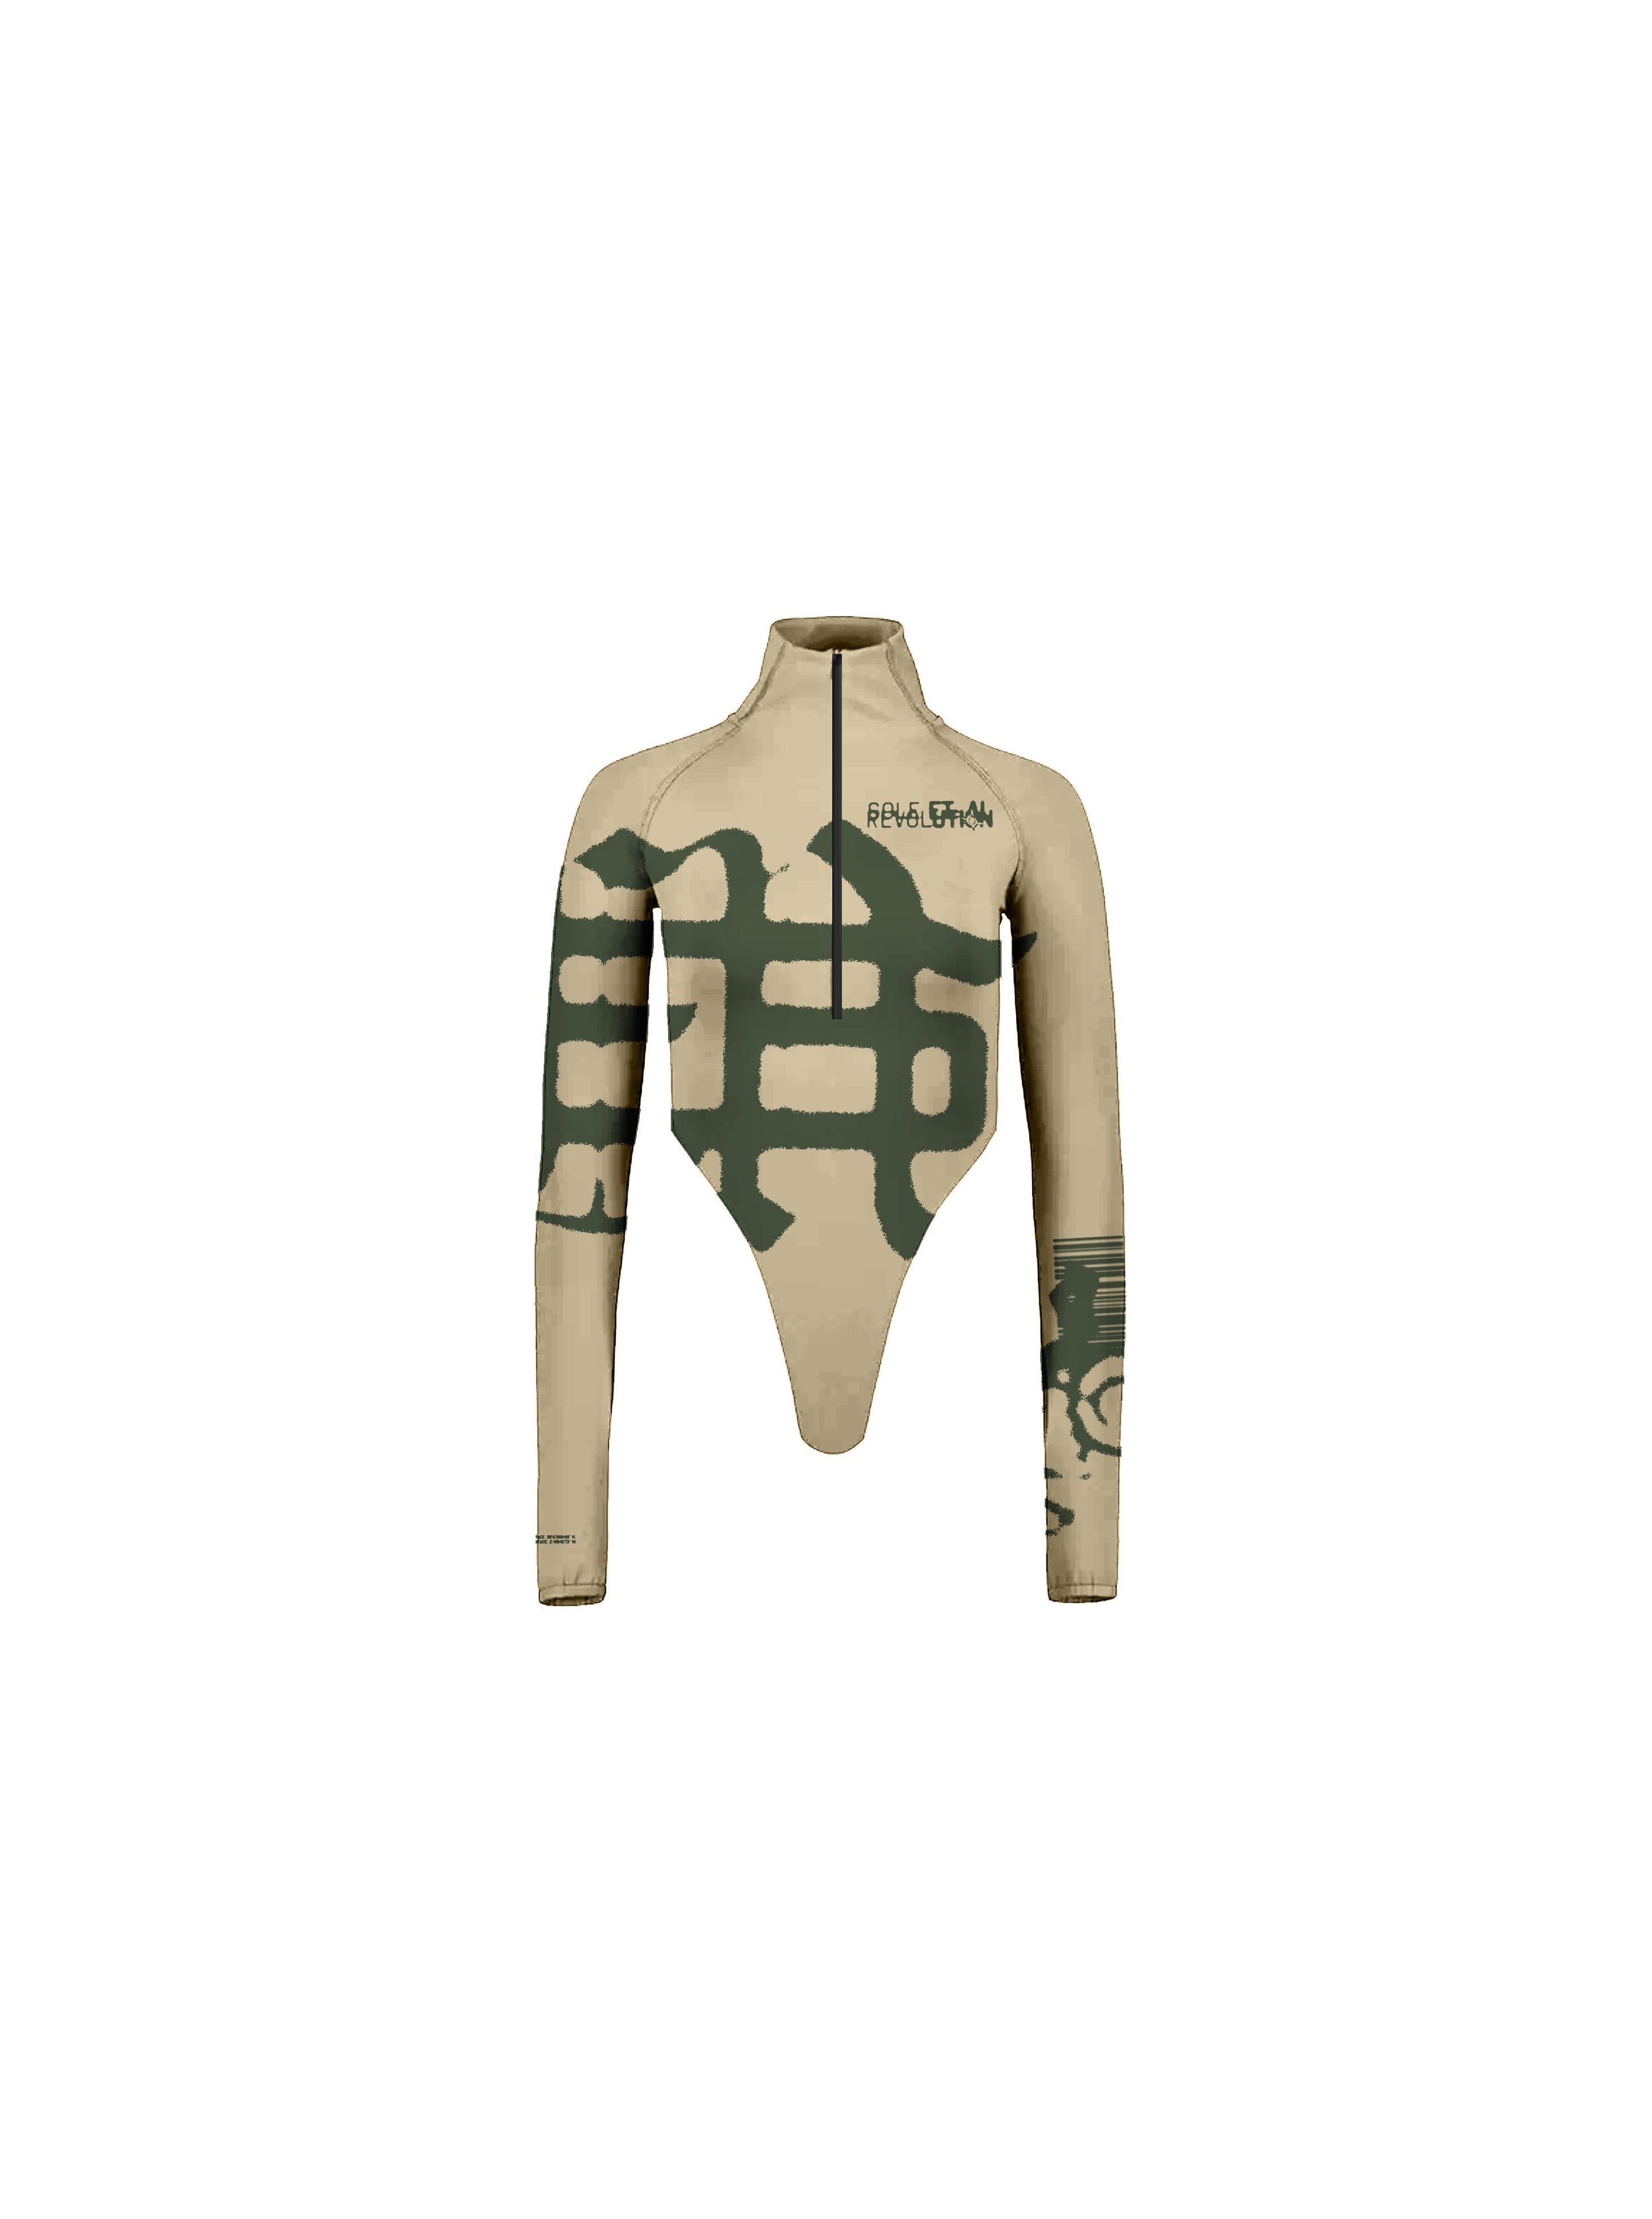 Sole et. Al Revølutiøn Zip Bodysuit : Sand / Military Green